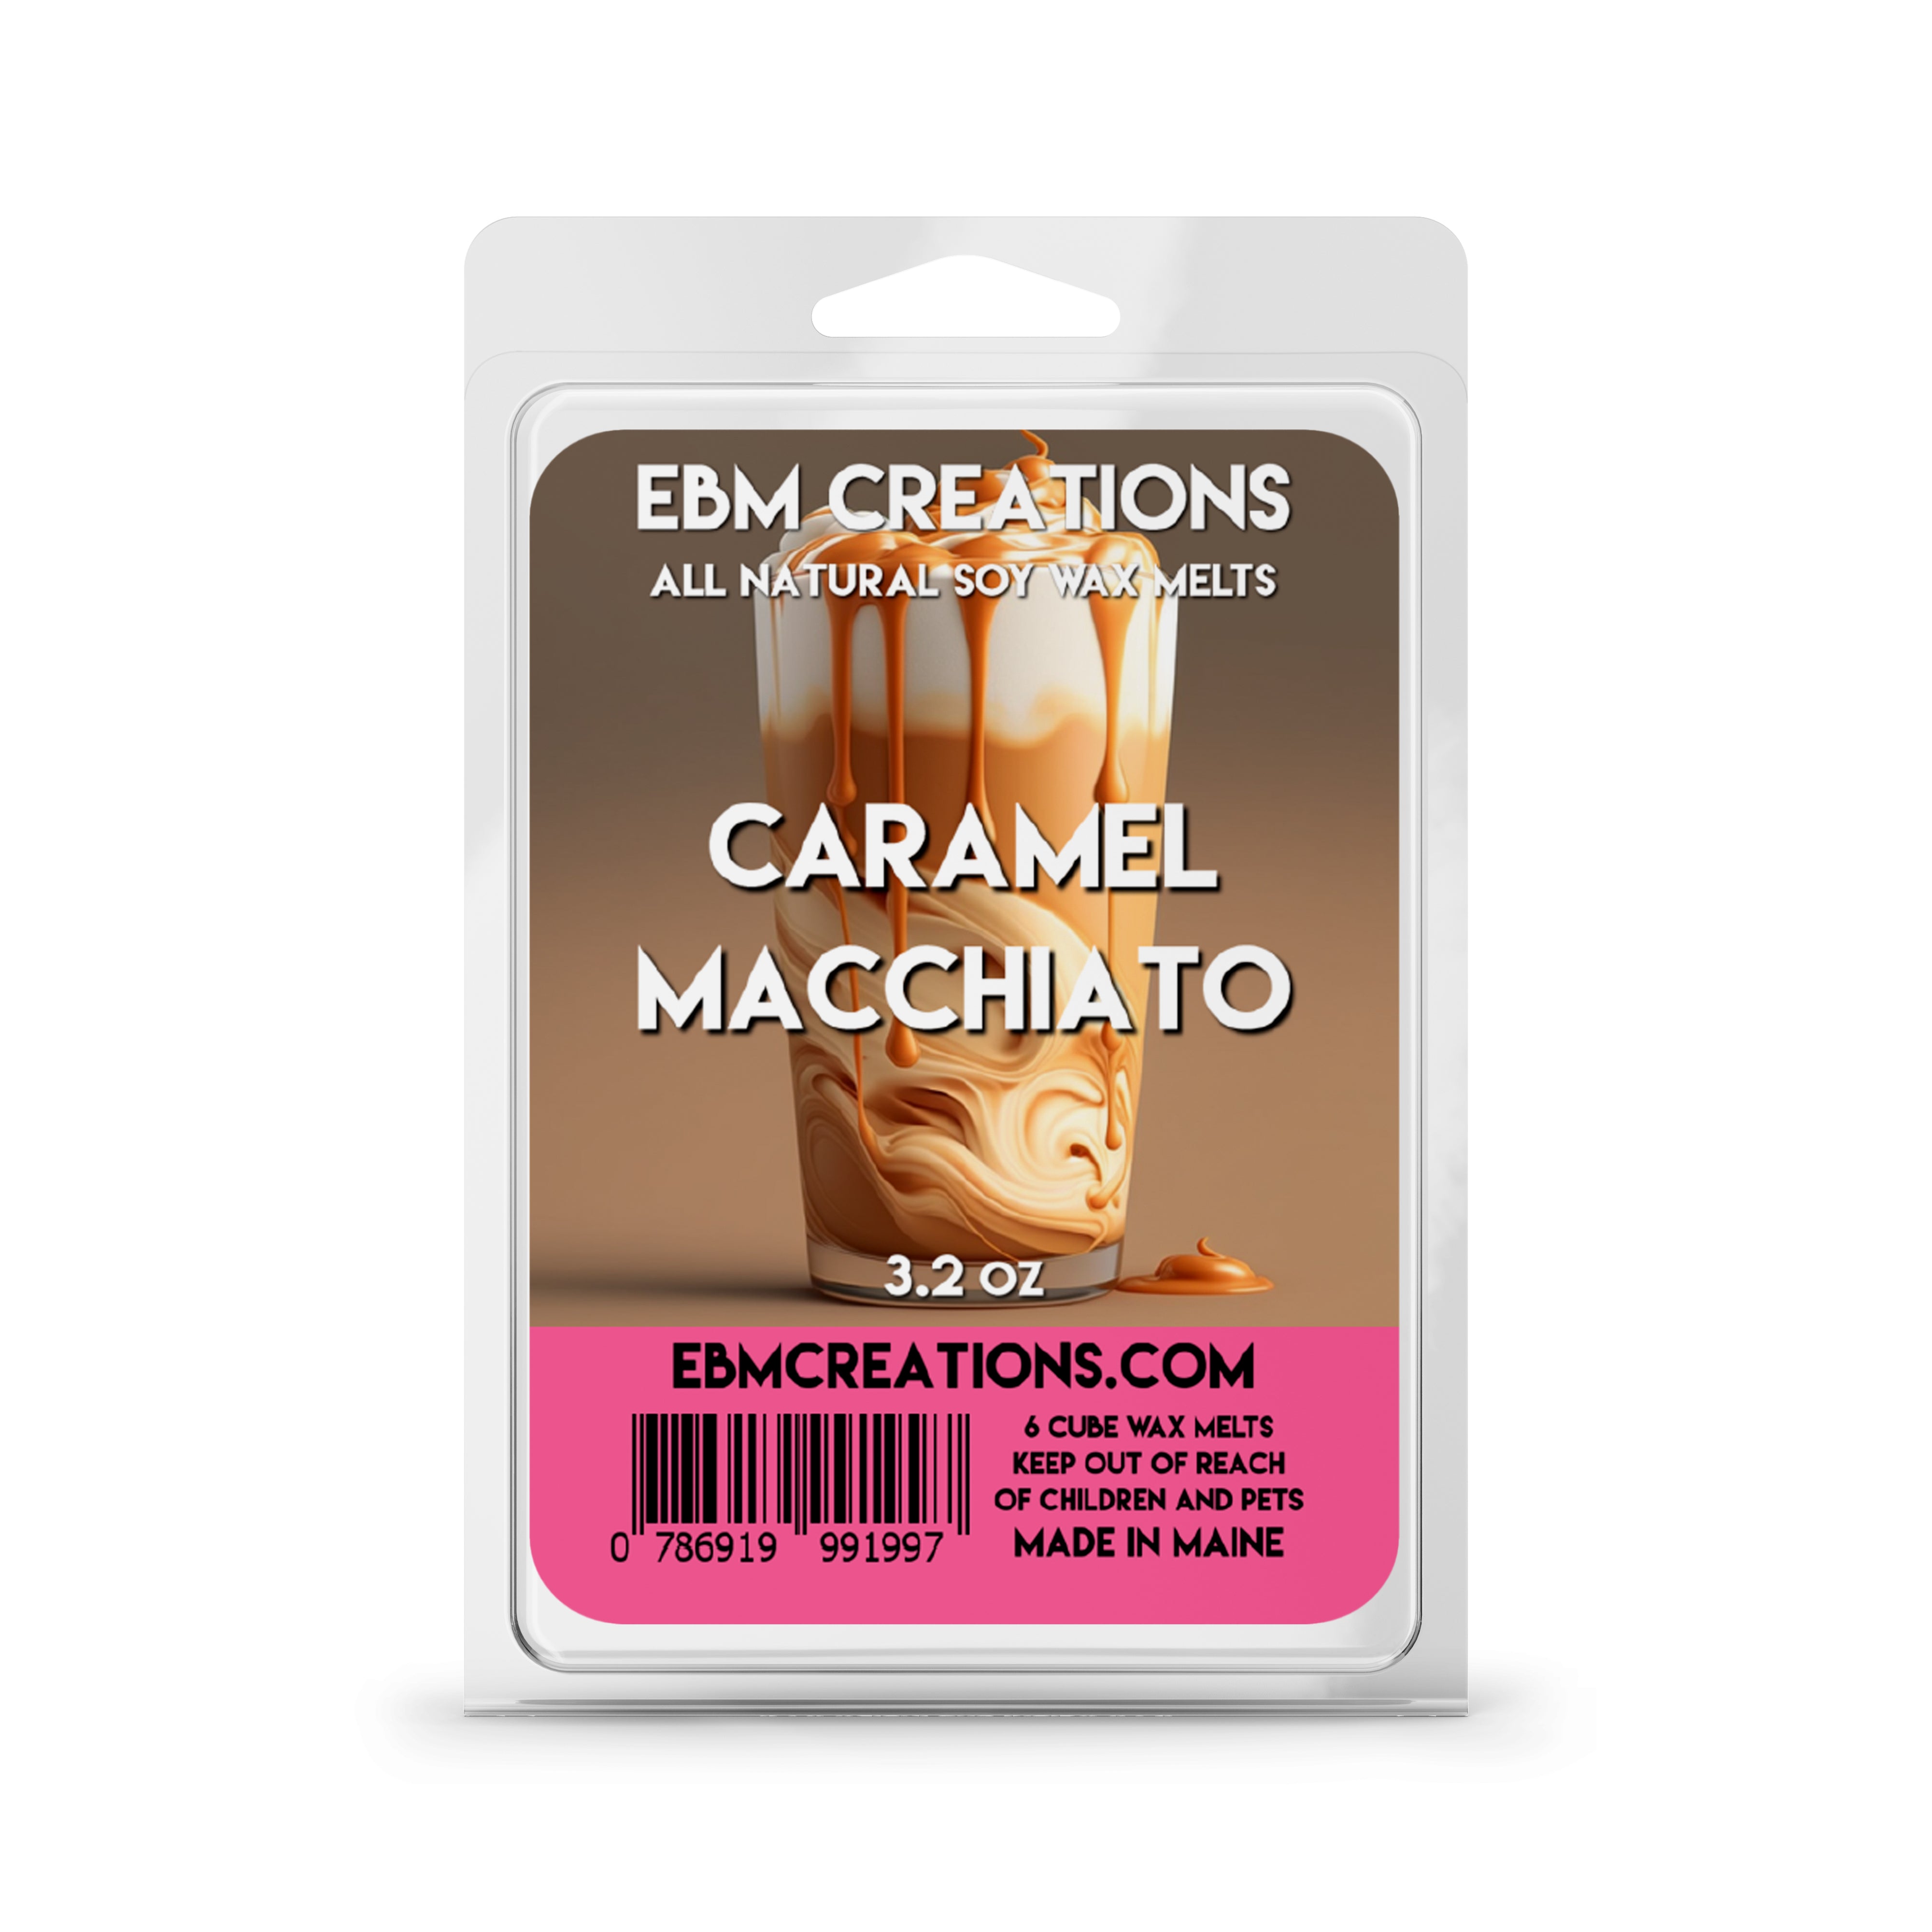 Caramel Macchiato - 3.2 oz Clamshell